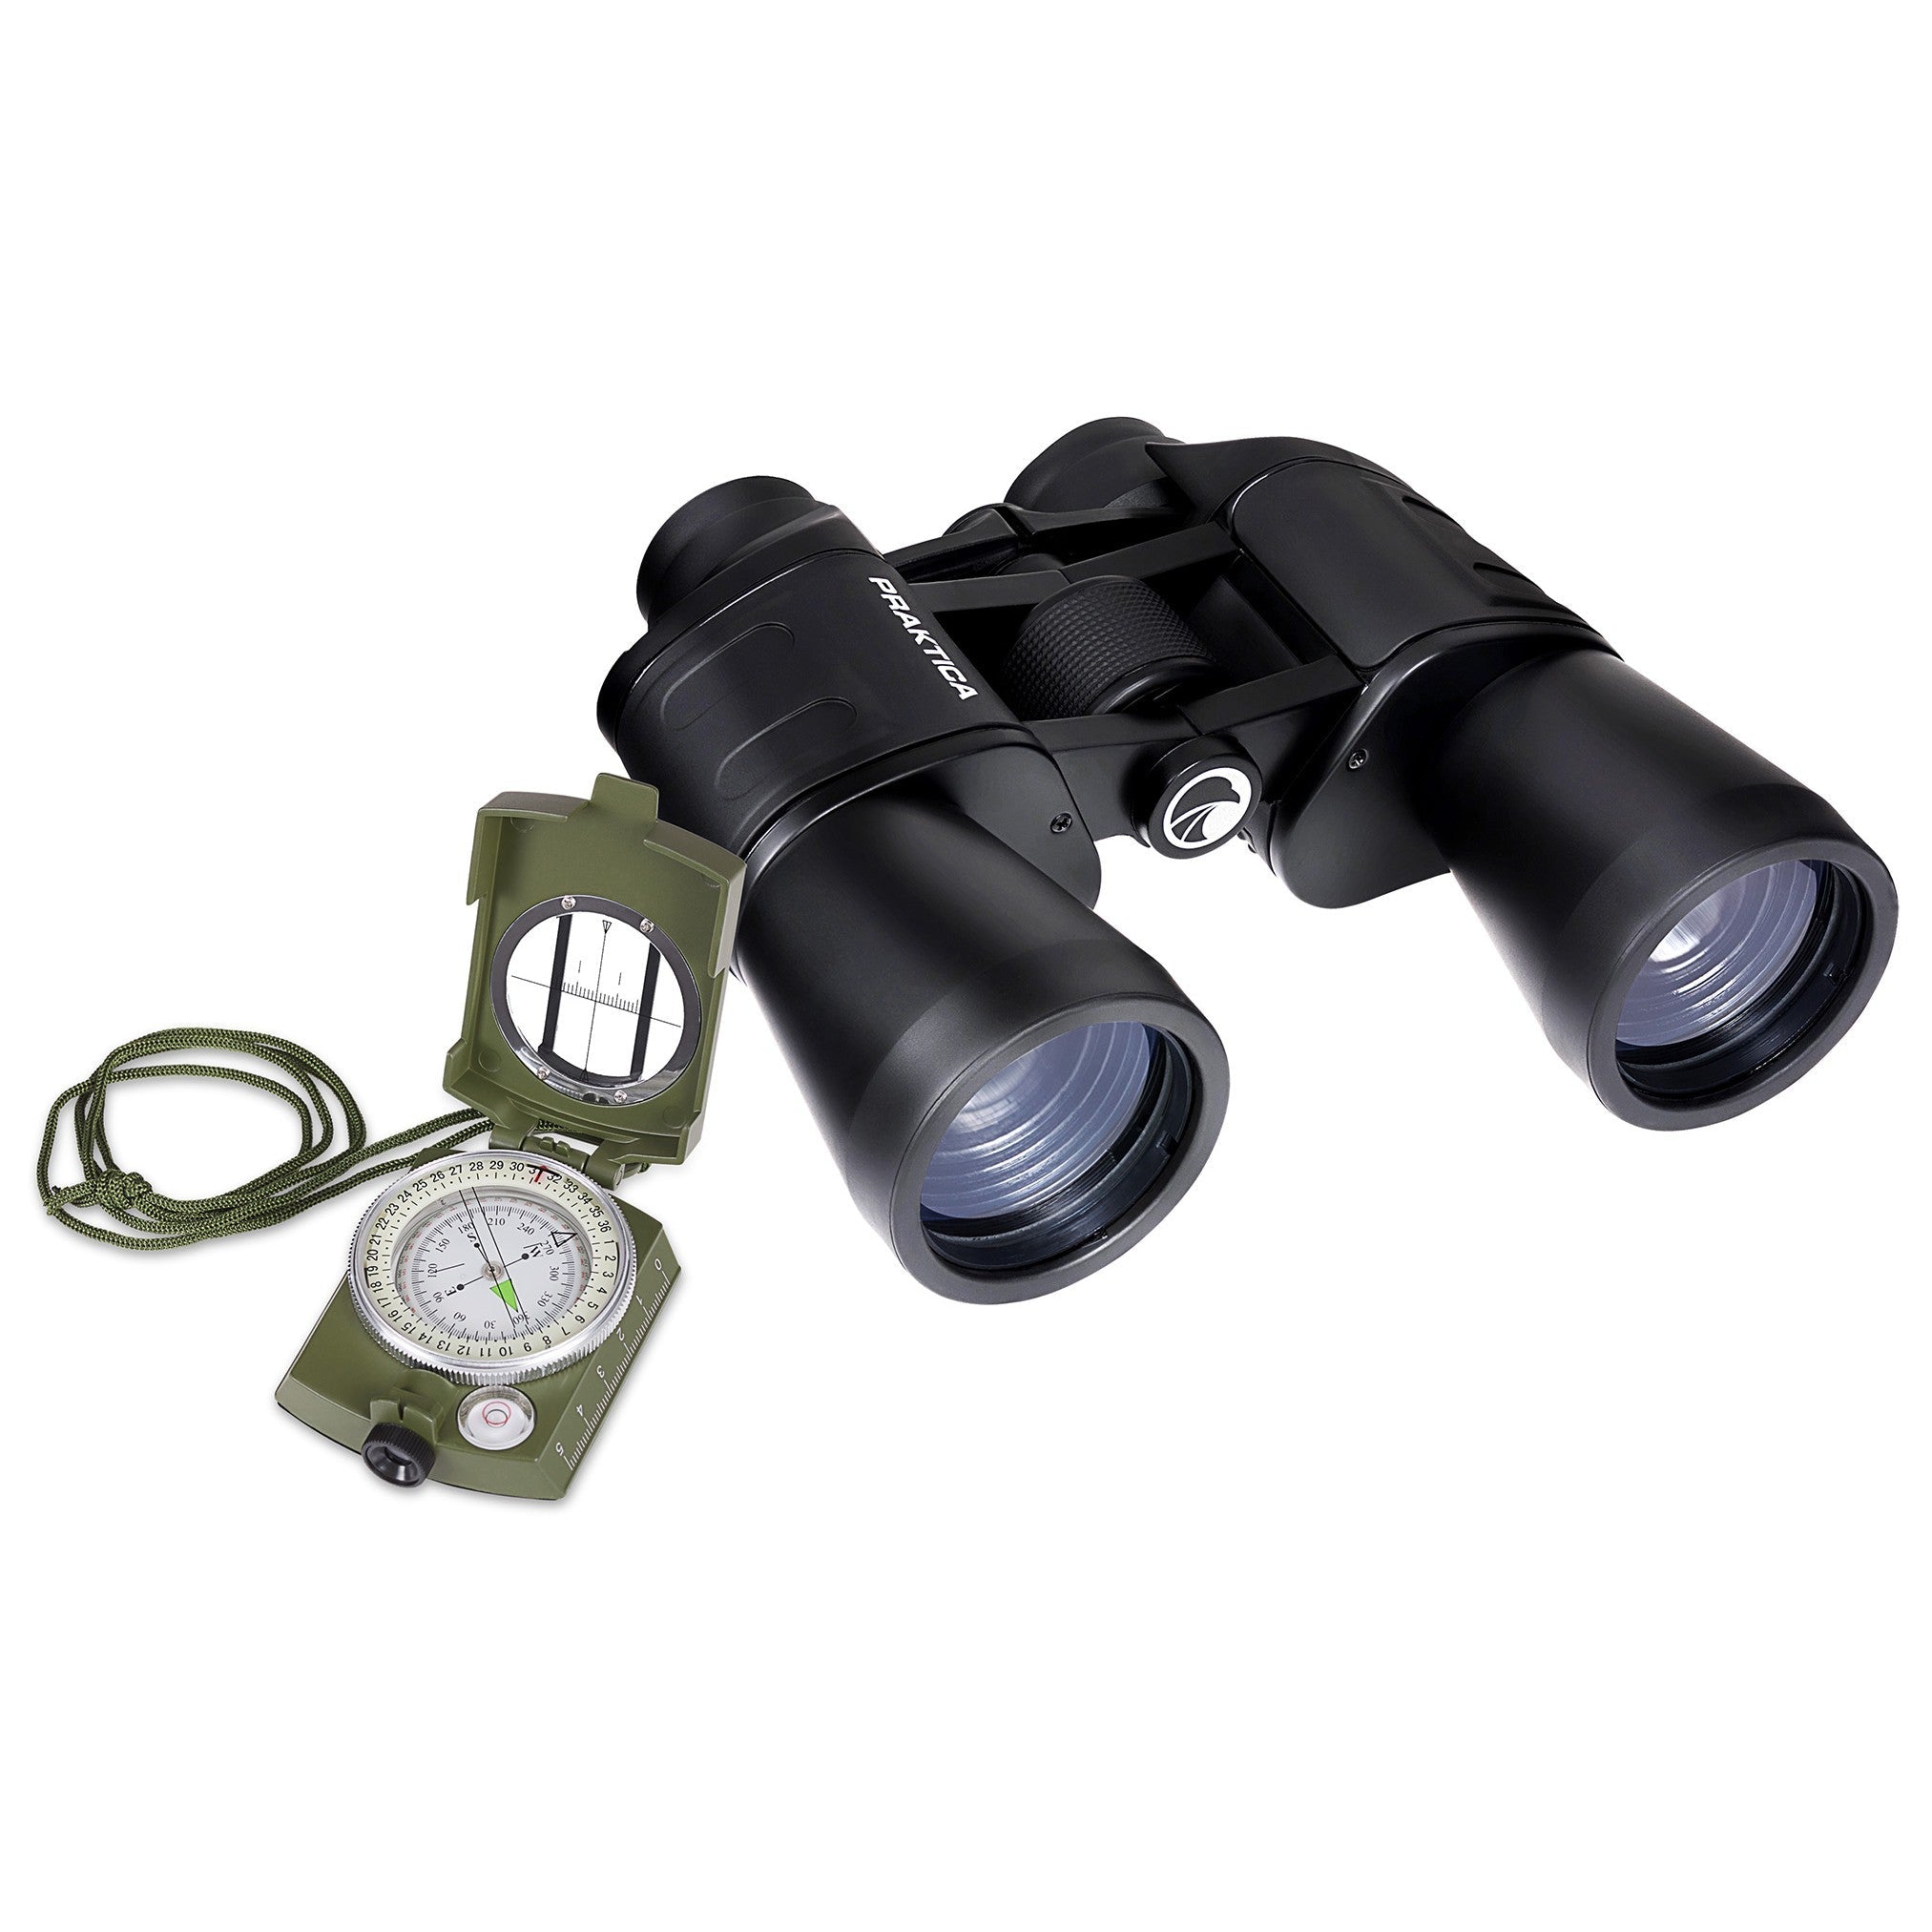 PRAKTICA Falcon 7x50mm Porro Prism Field Binoculars - Black (Binoculars + Compass)